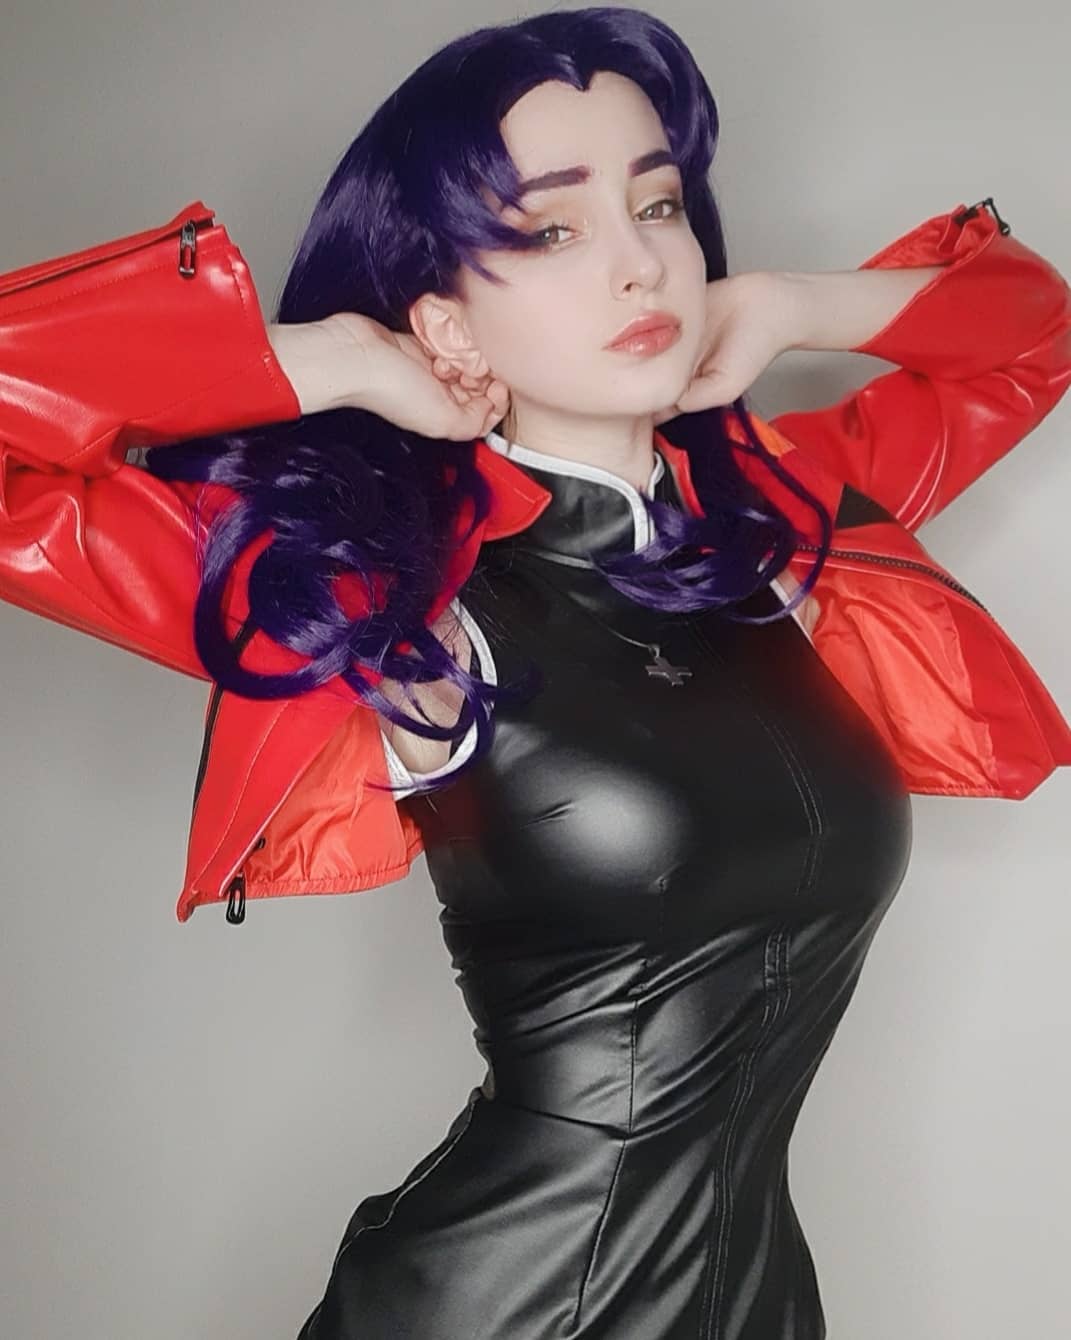 Modelo Hologana fez um apaixonante cosplay Misato de Evangelion